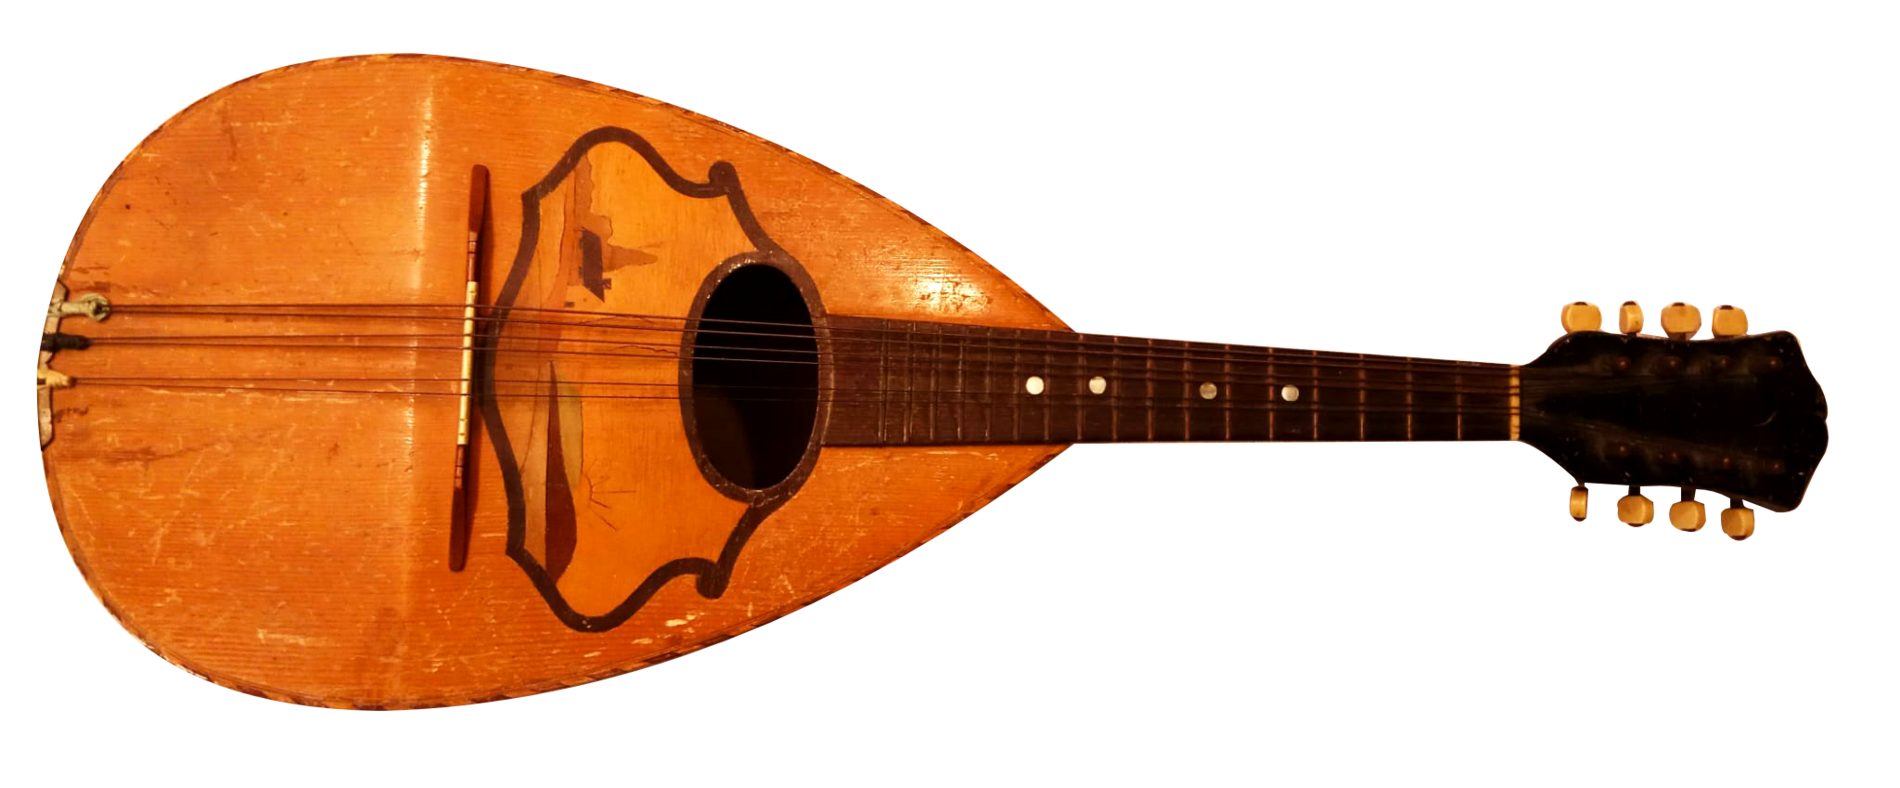 Photograph of a mandolin